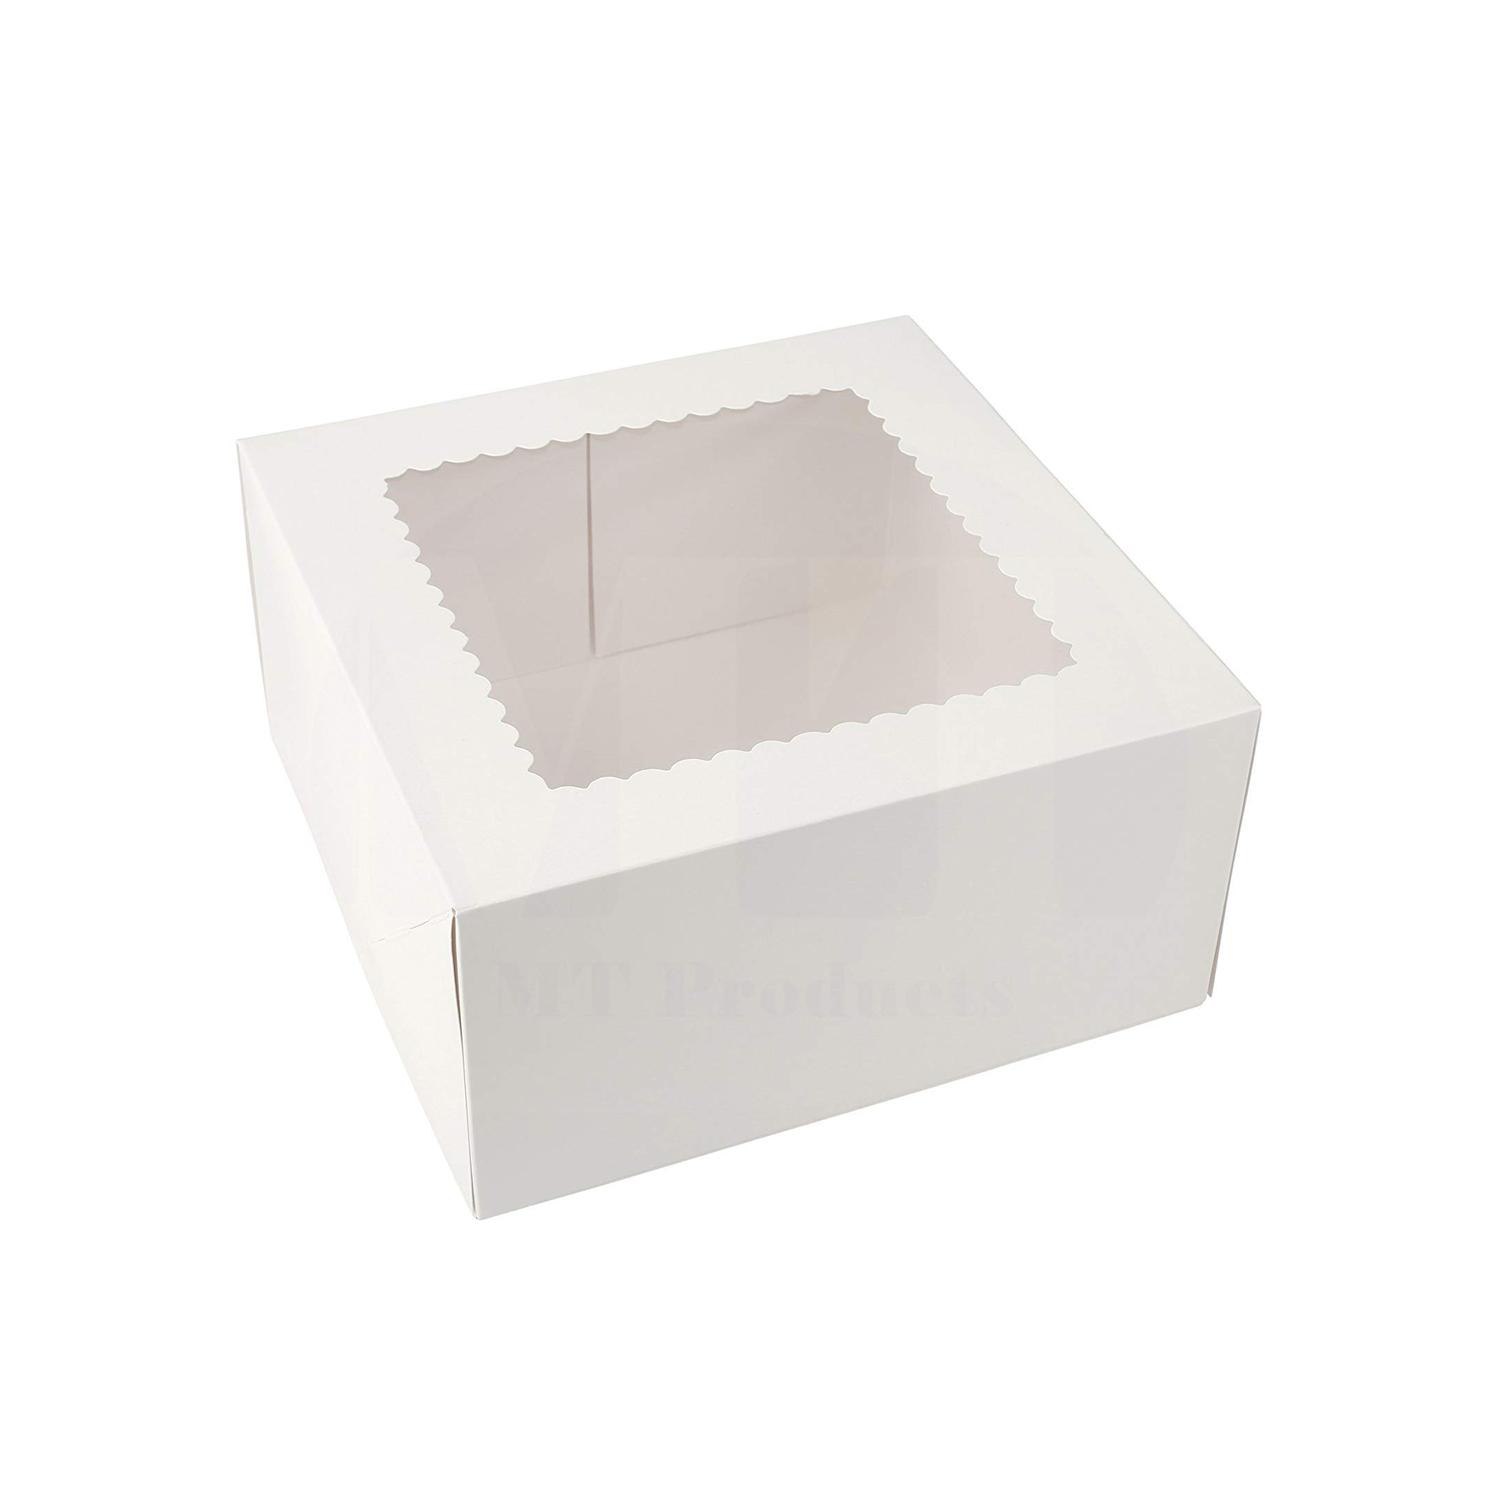 5" X 5" X 4" WHITE WINDOW CAKE BOX